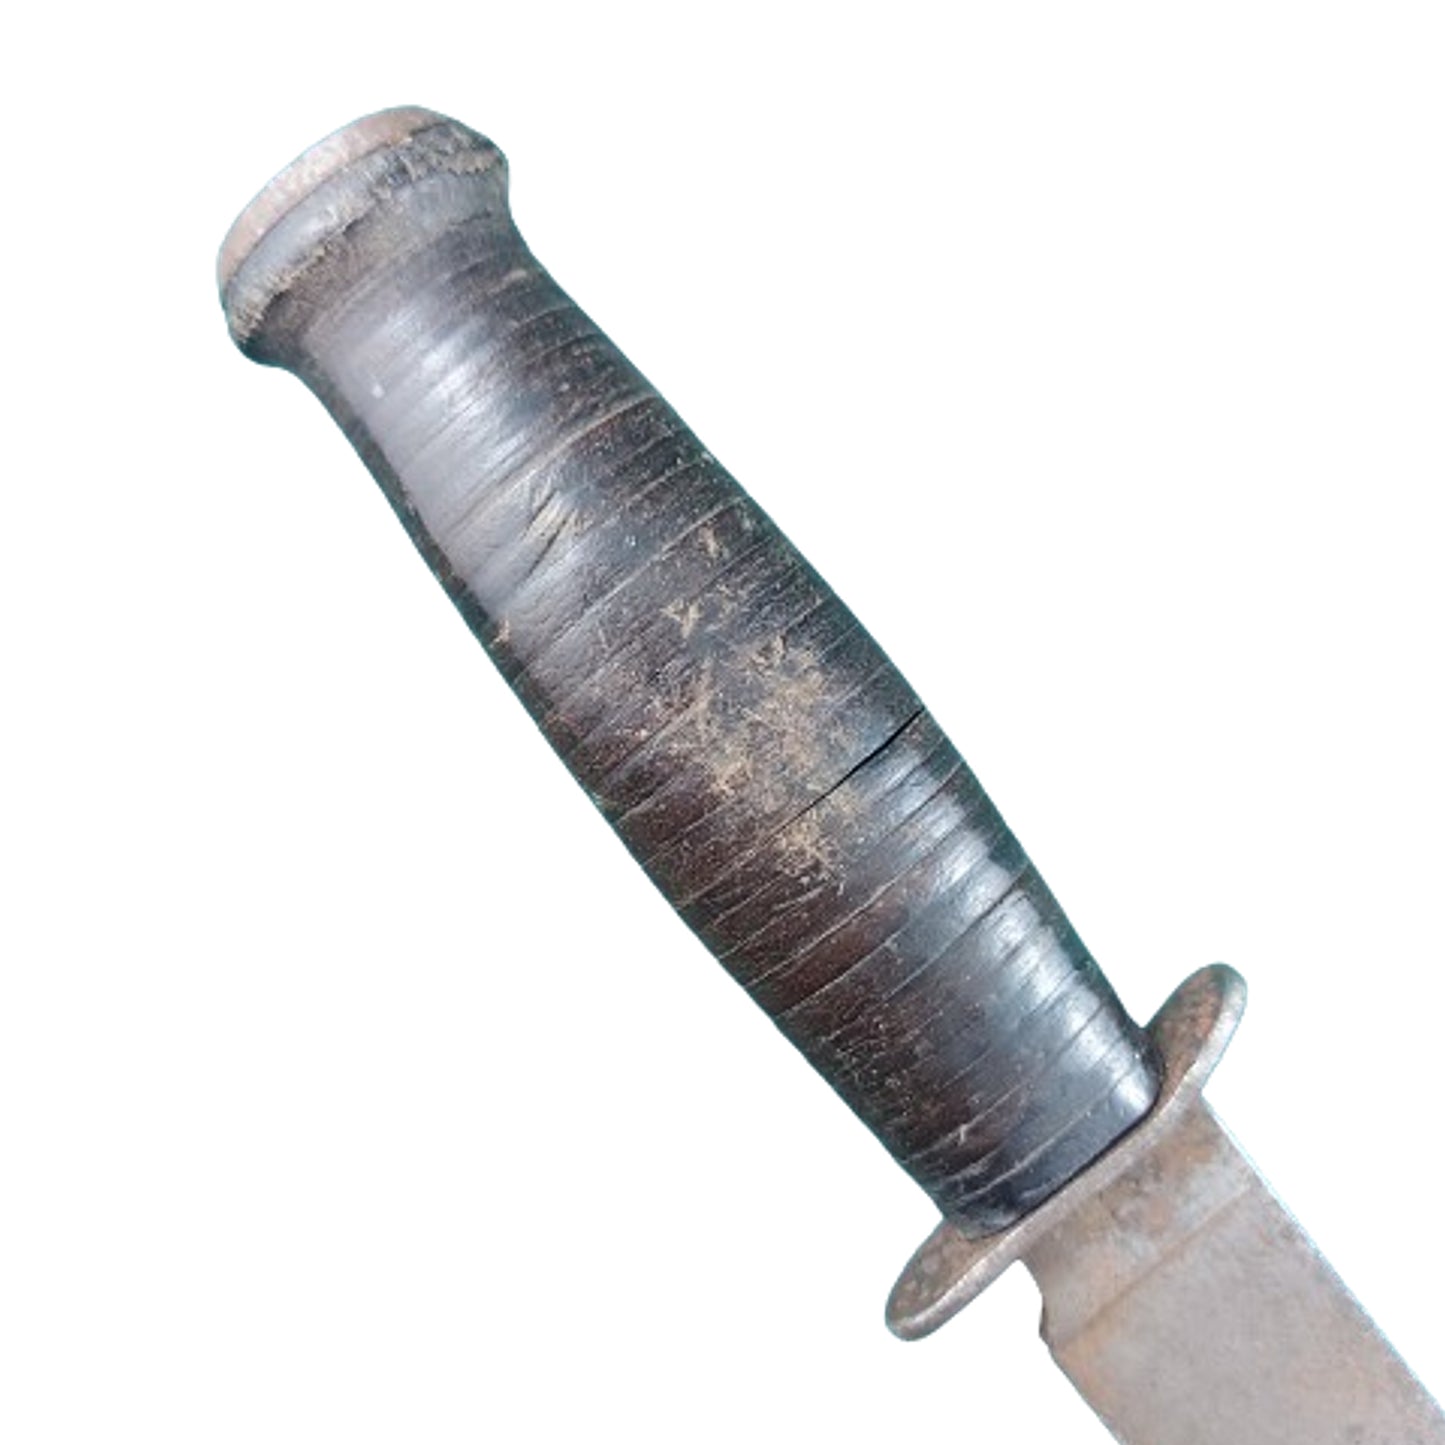 Named WW2 M3 Knife And Case Knife In Scabbards -Adak Kiska Service